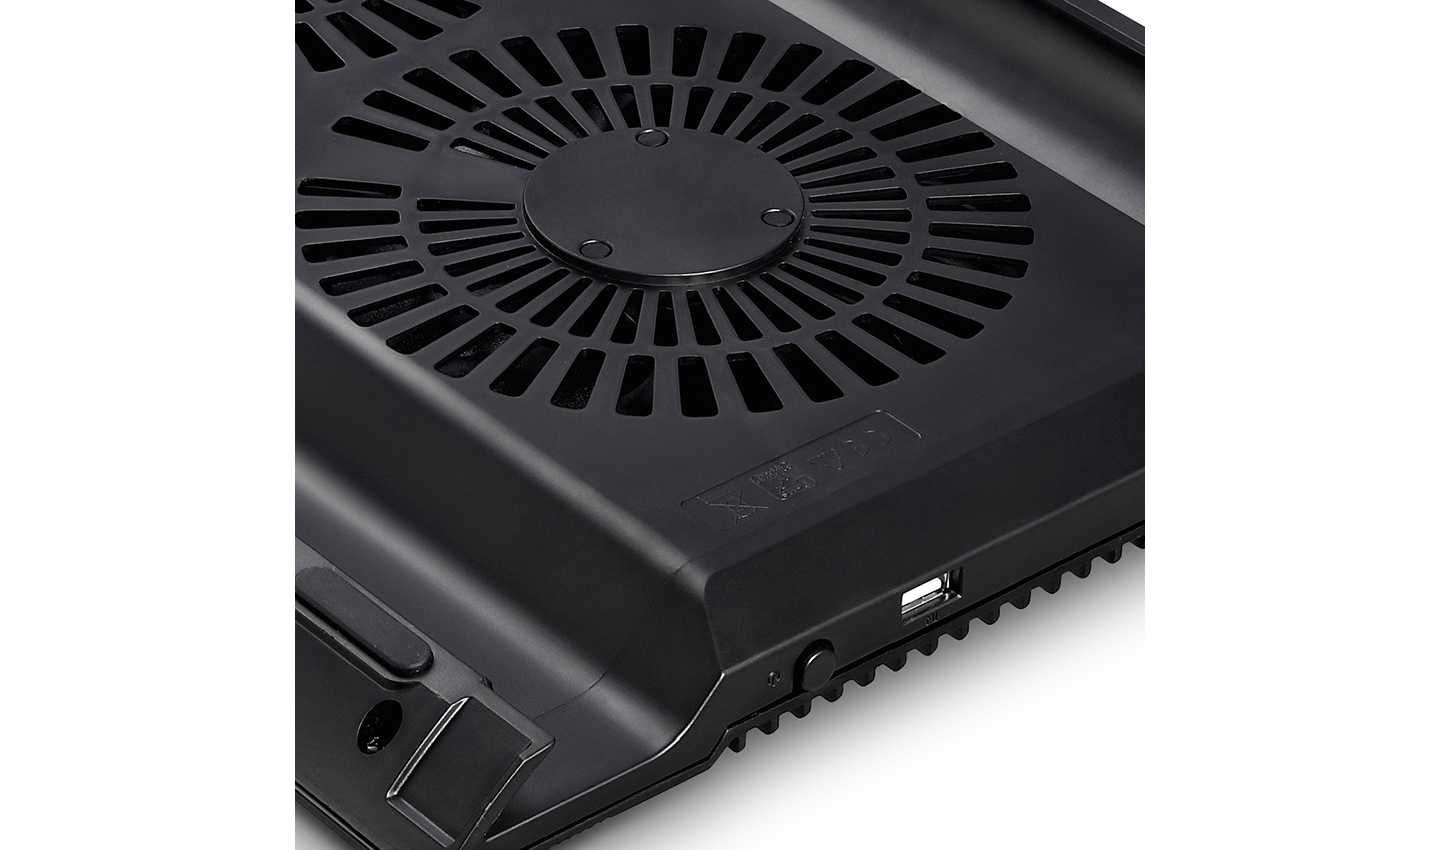 Охлаждающая подставка для ноутбука Deepcool N8 Black